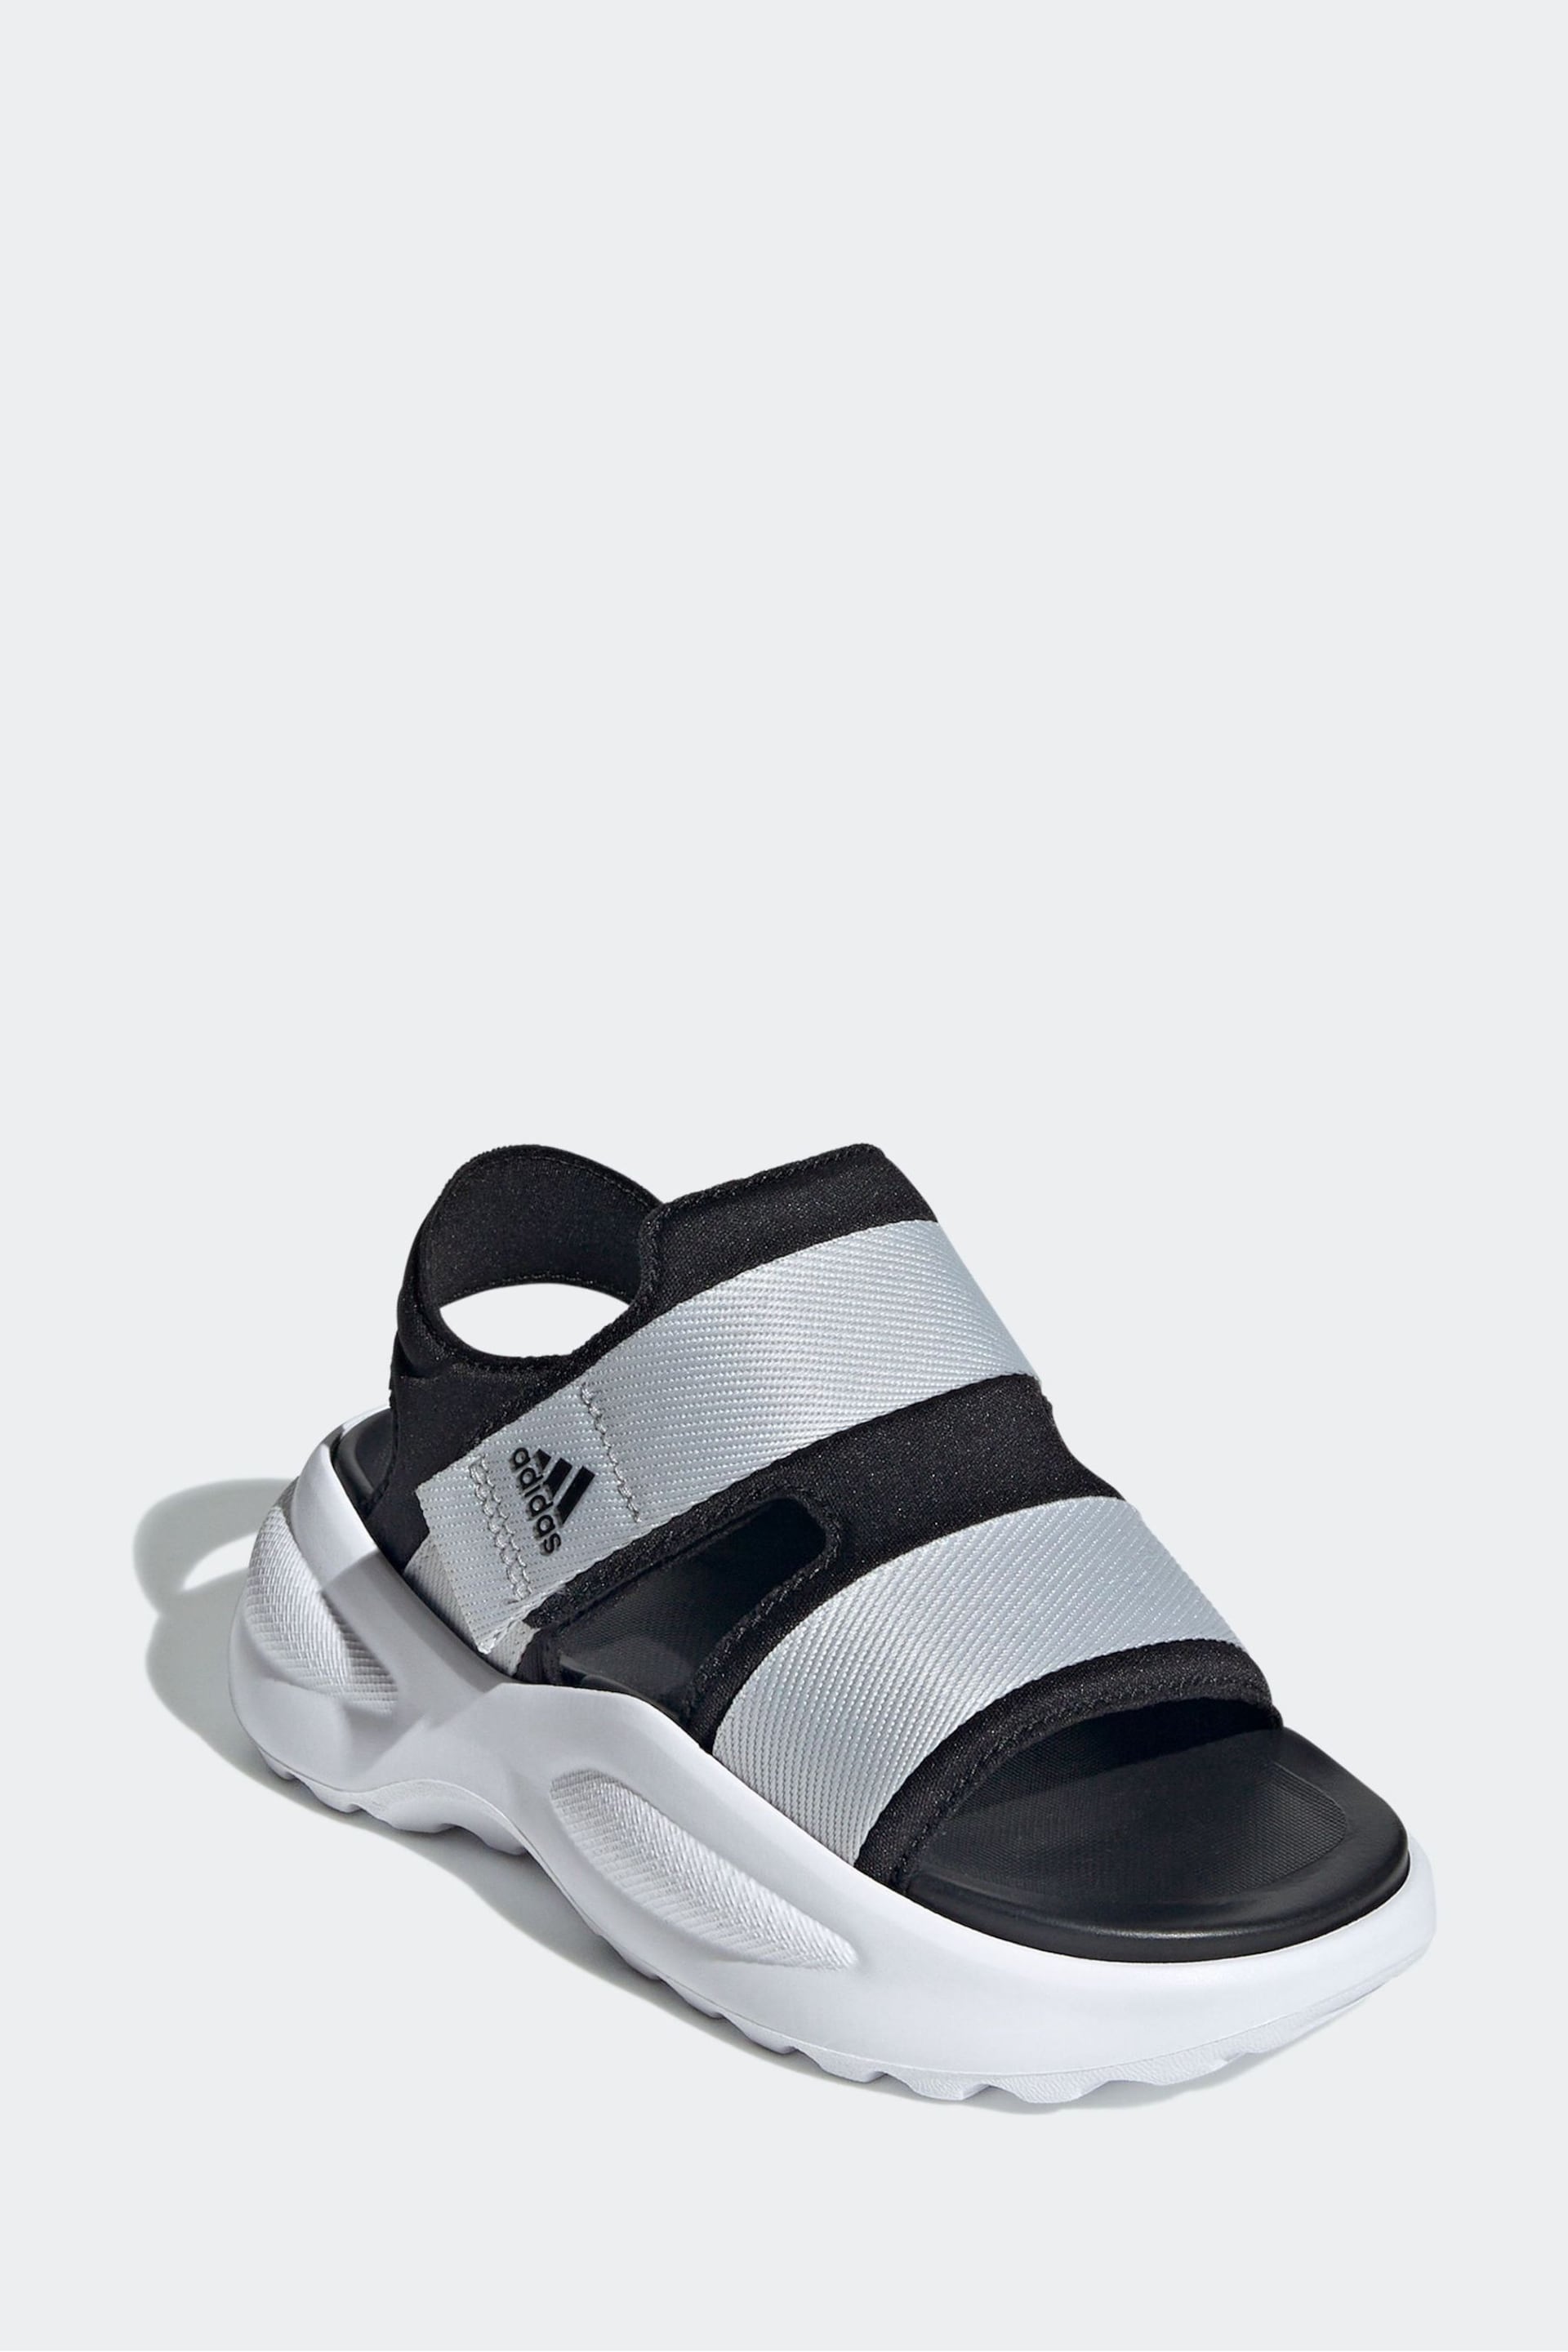 adidas Black Kids Mehana Sandals - Image 3 of 8